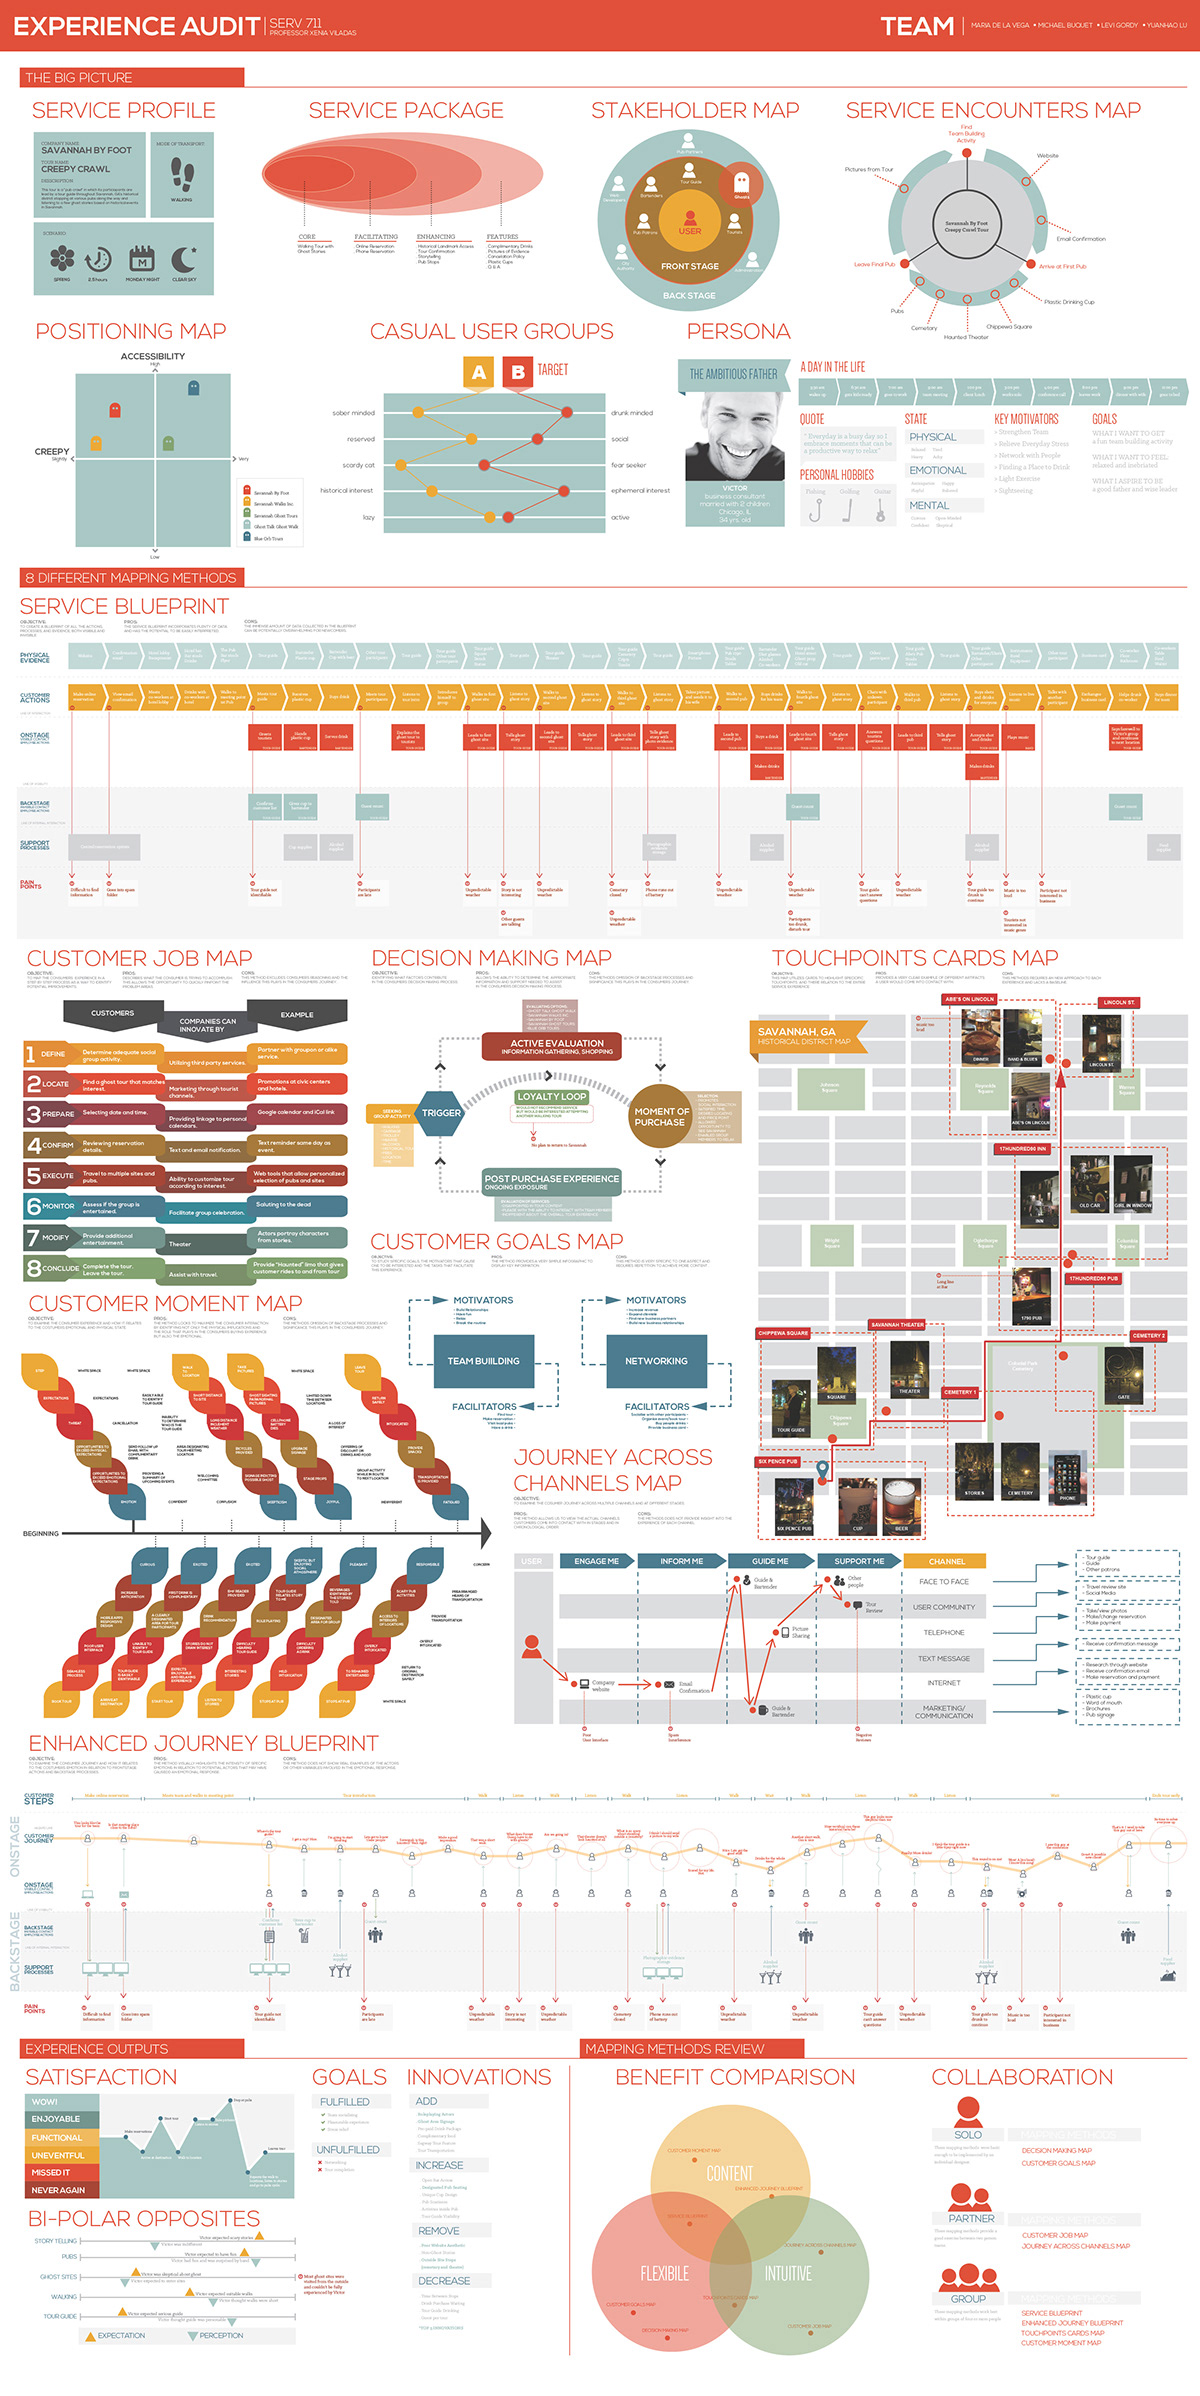 Service design ghost tour SERV 711 pub crawl Mapping Service Blueprint Analysis